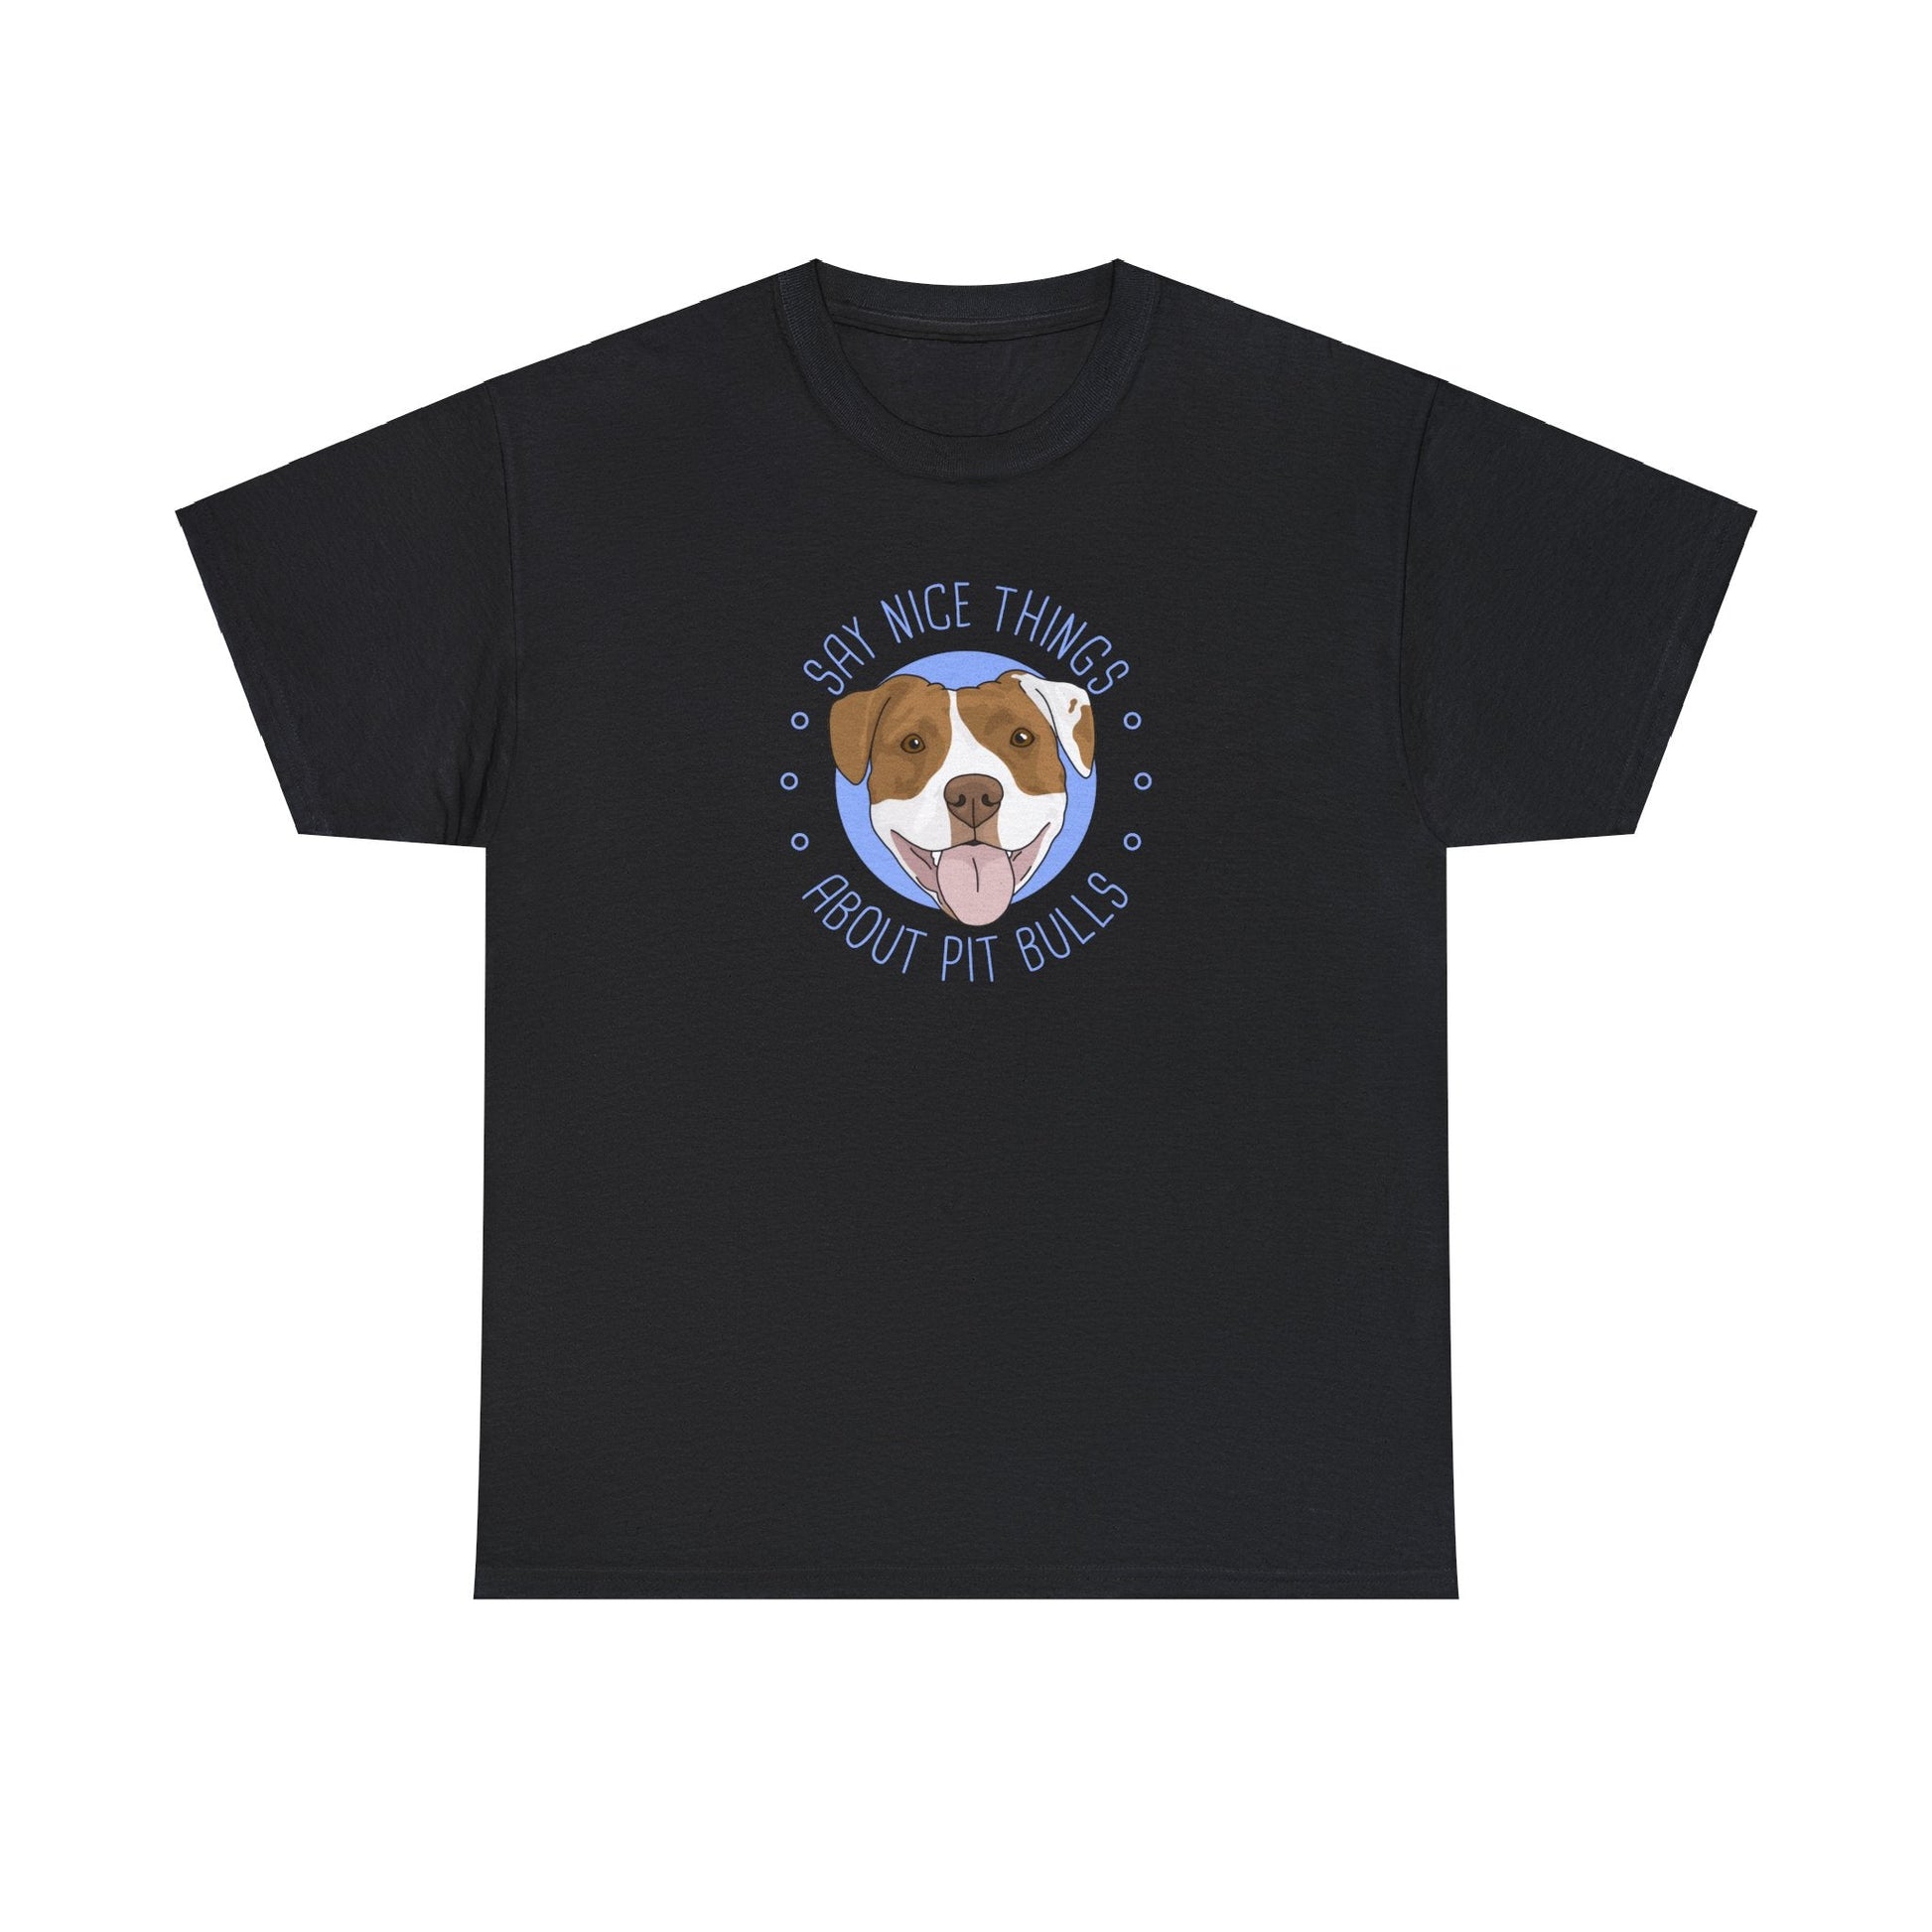 Say Nice Things About Pit Bulls | T-shirt - Detezi Designs-12638900204793034229